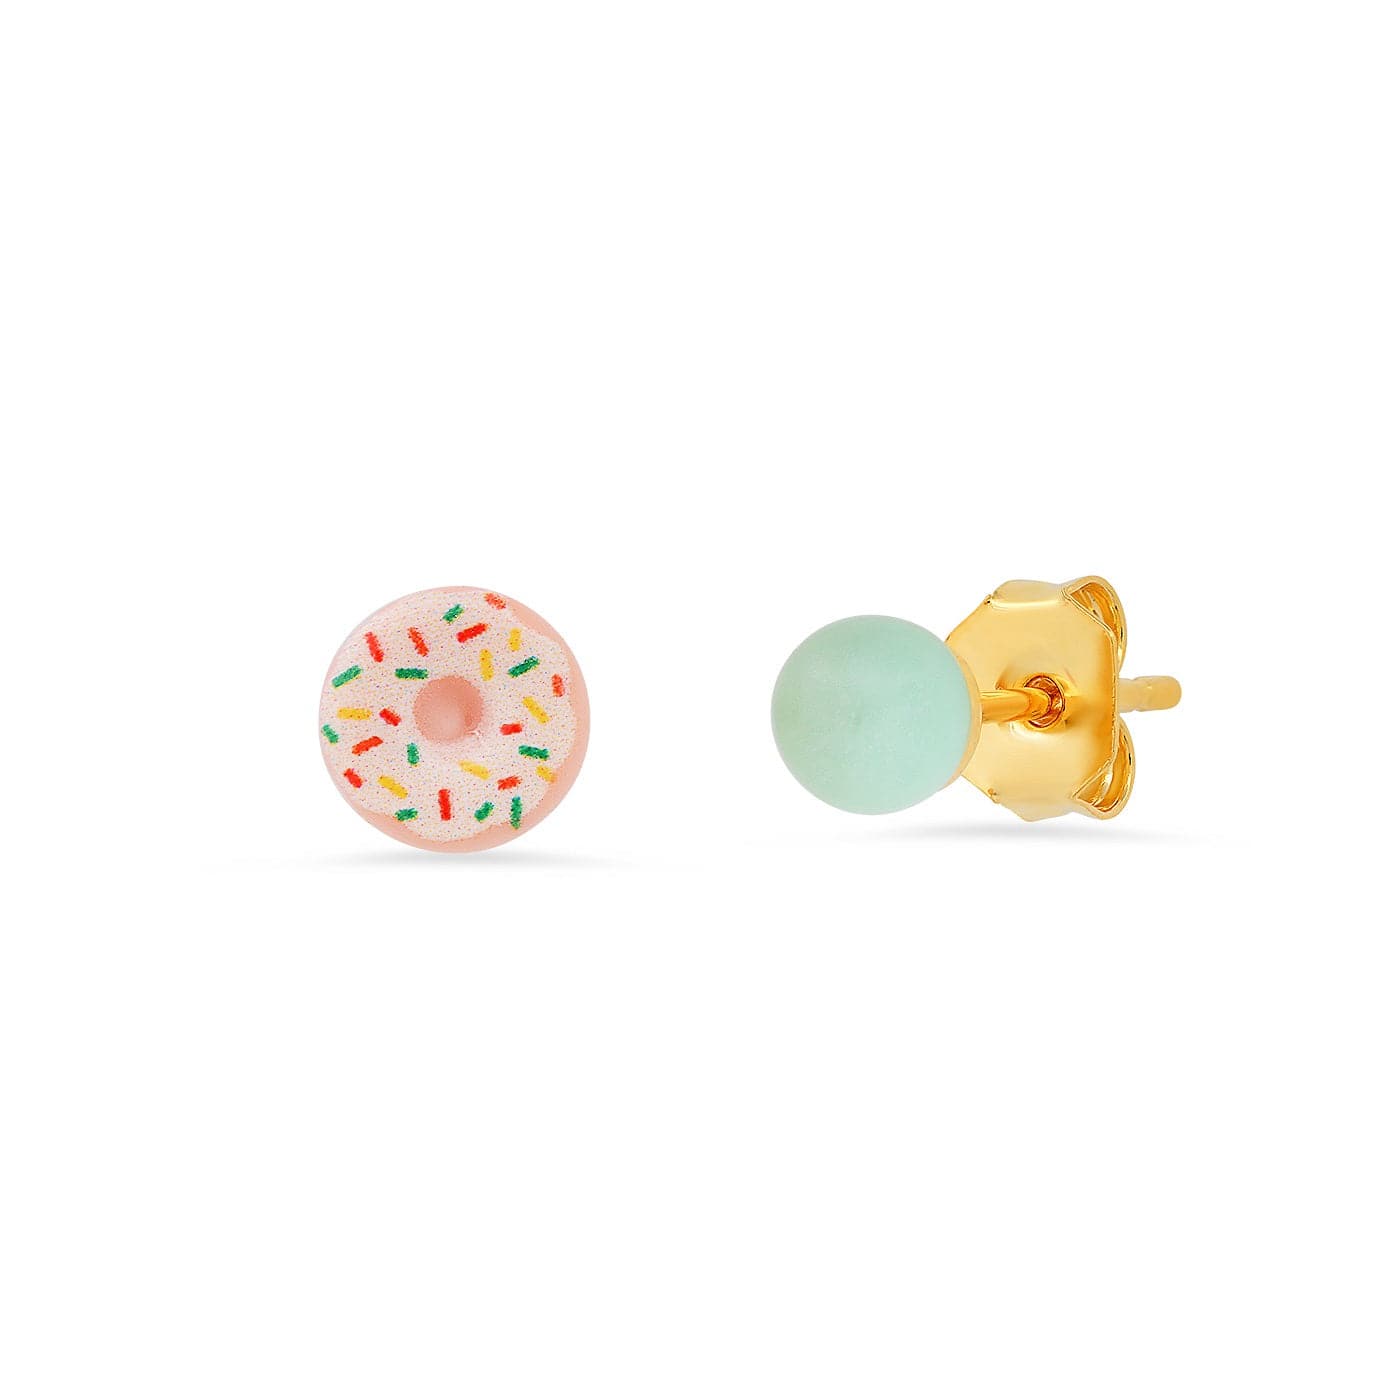 TAI JEWELRY Earrings White/Light Blue Glazed Donut Mismatched Studs